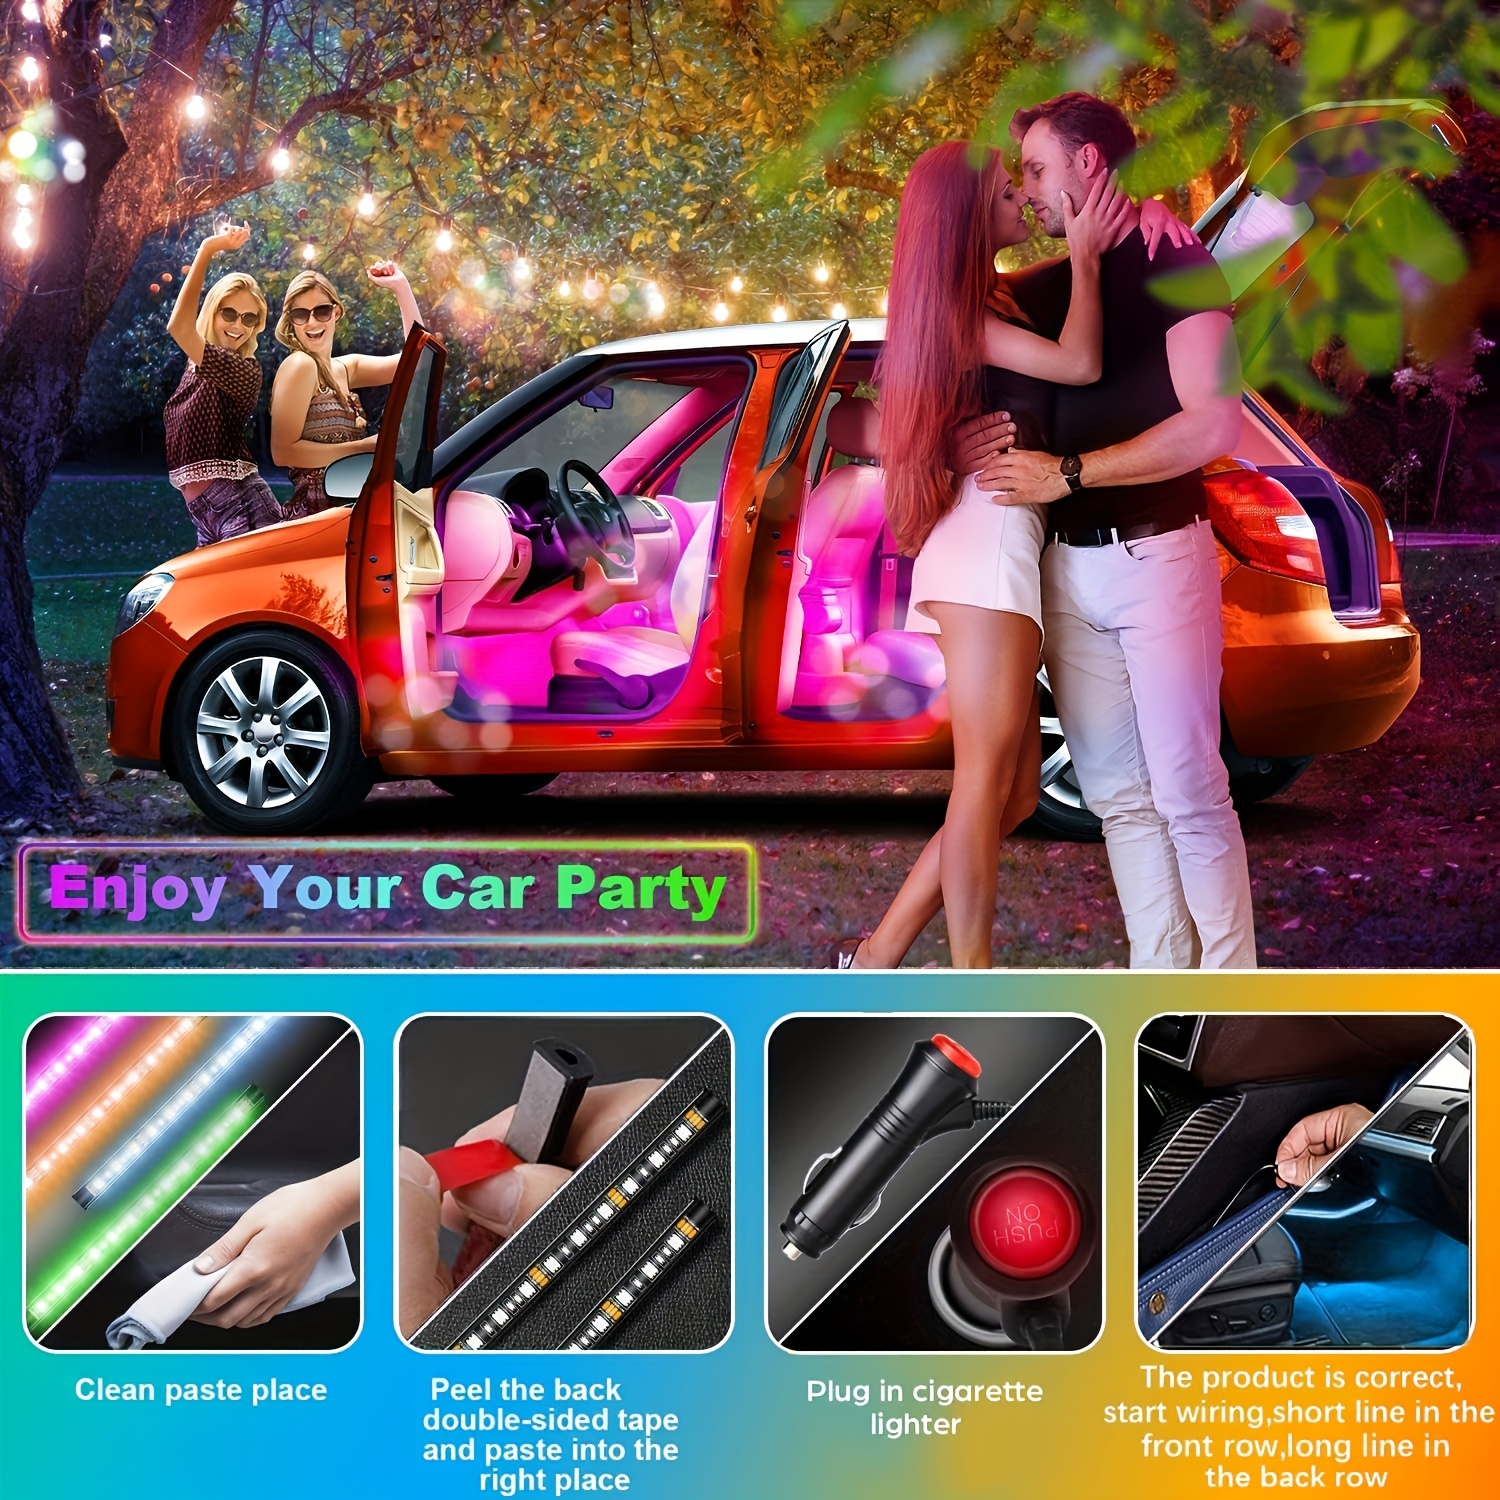 Upgrade Your Car with 4Pcs 48 LEDs RGB Interior Lights - App Control, DIY  Music Mode & Car Charger!